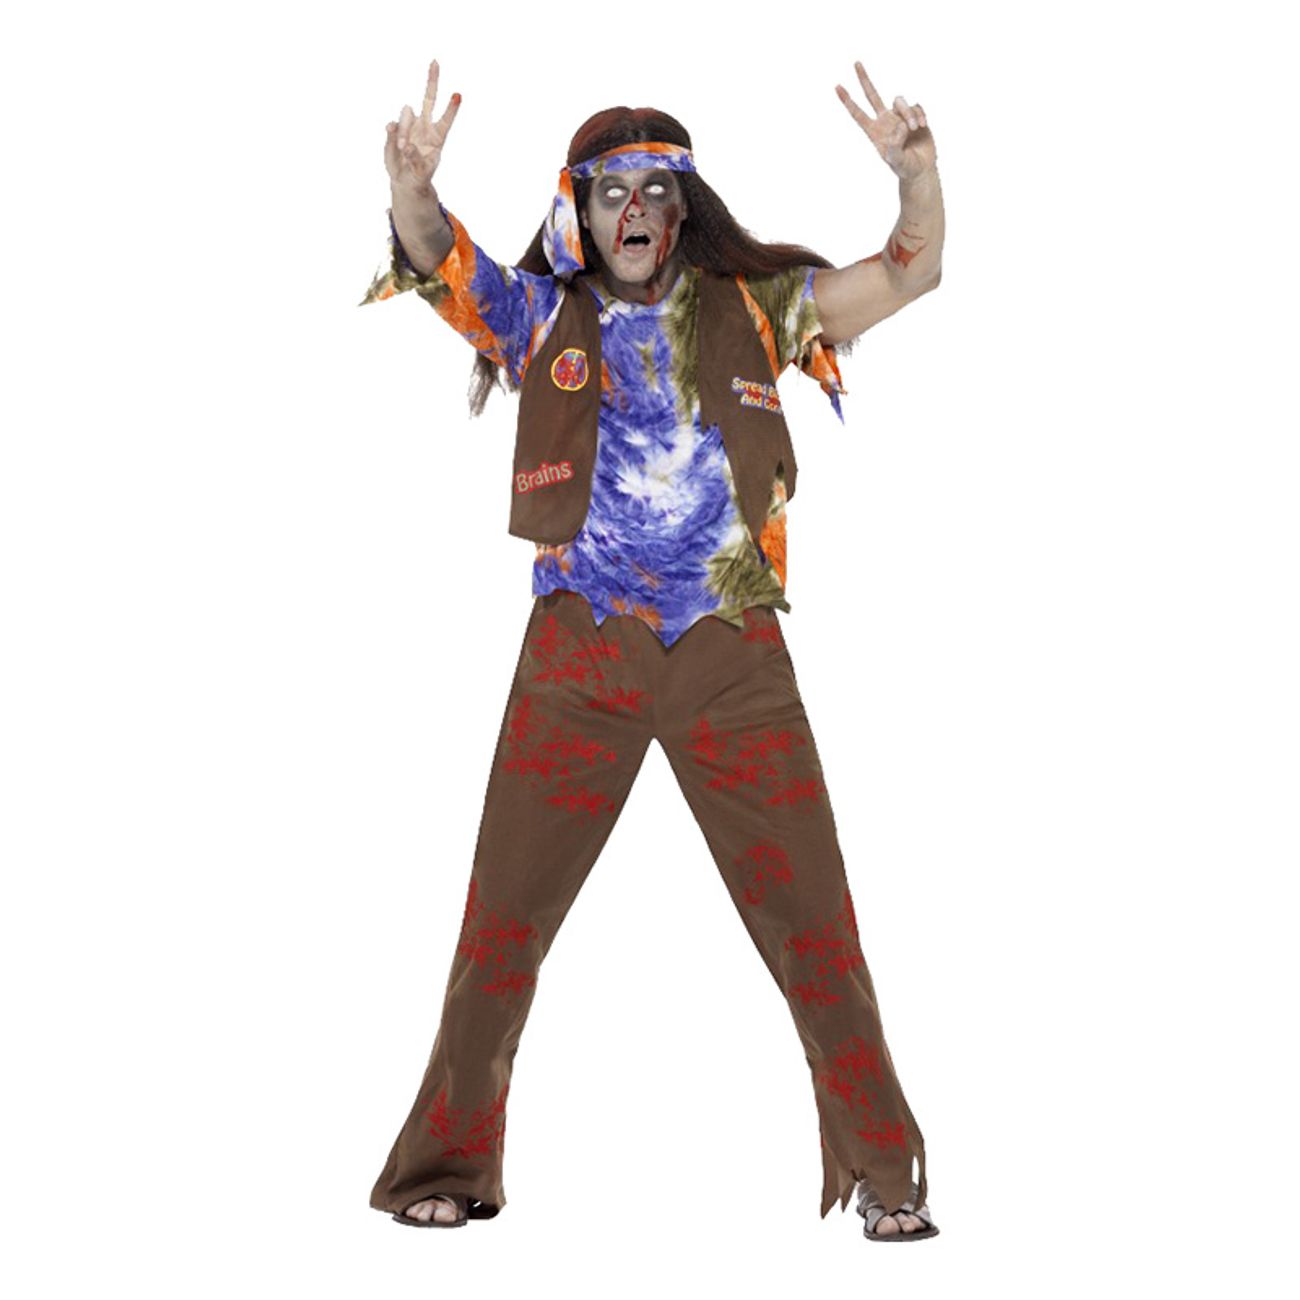 60-tals-hippieman-zombie-maskeraddrakt-1